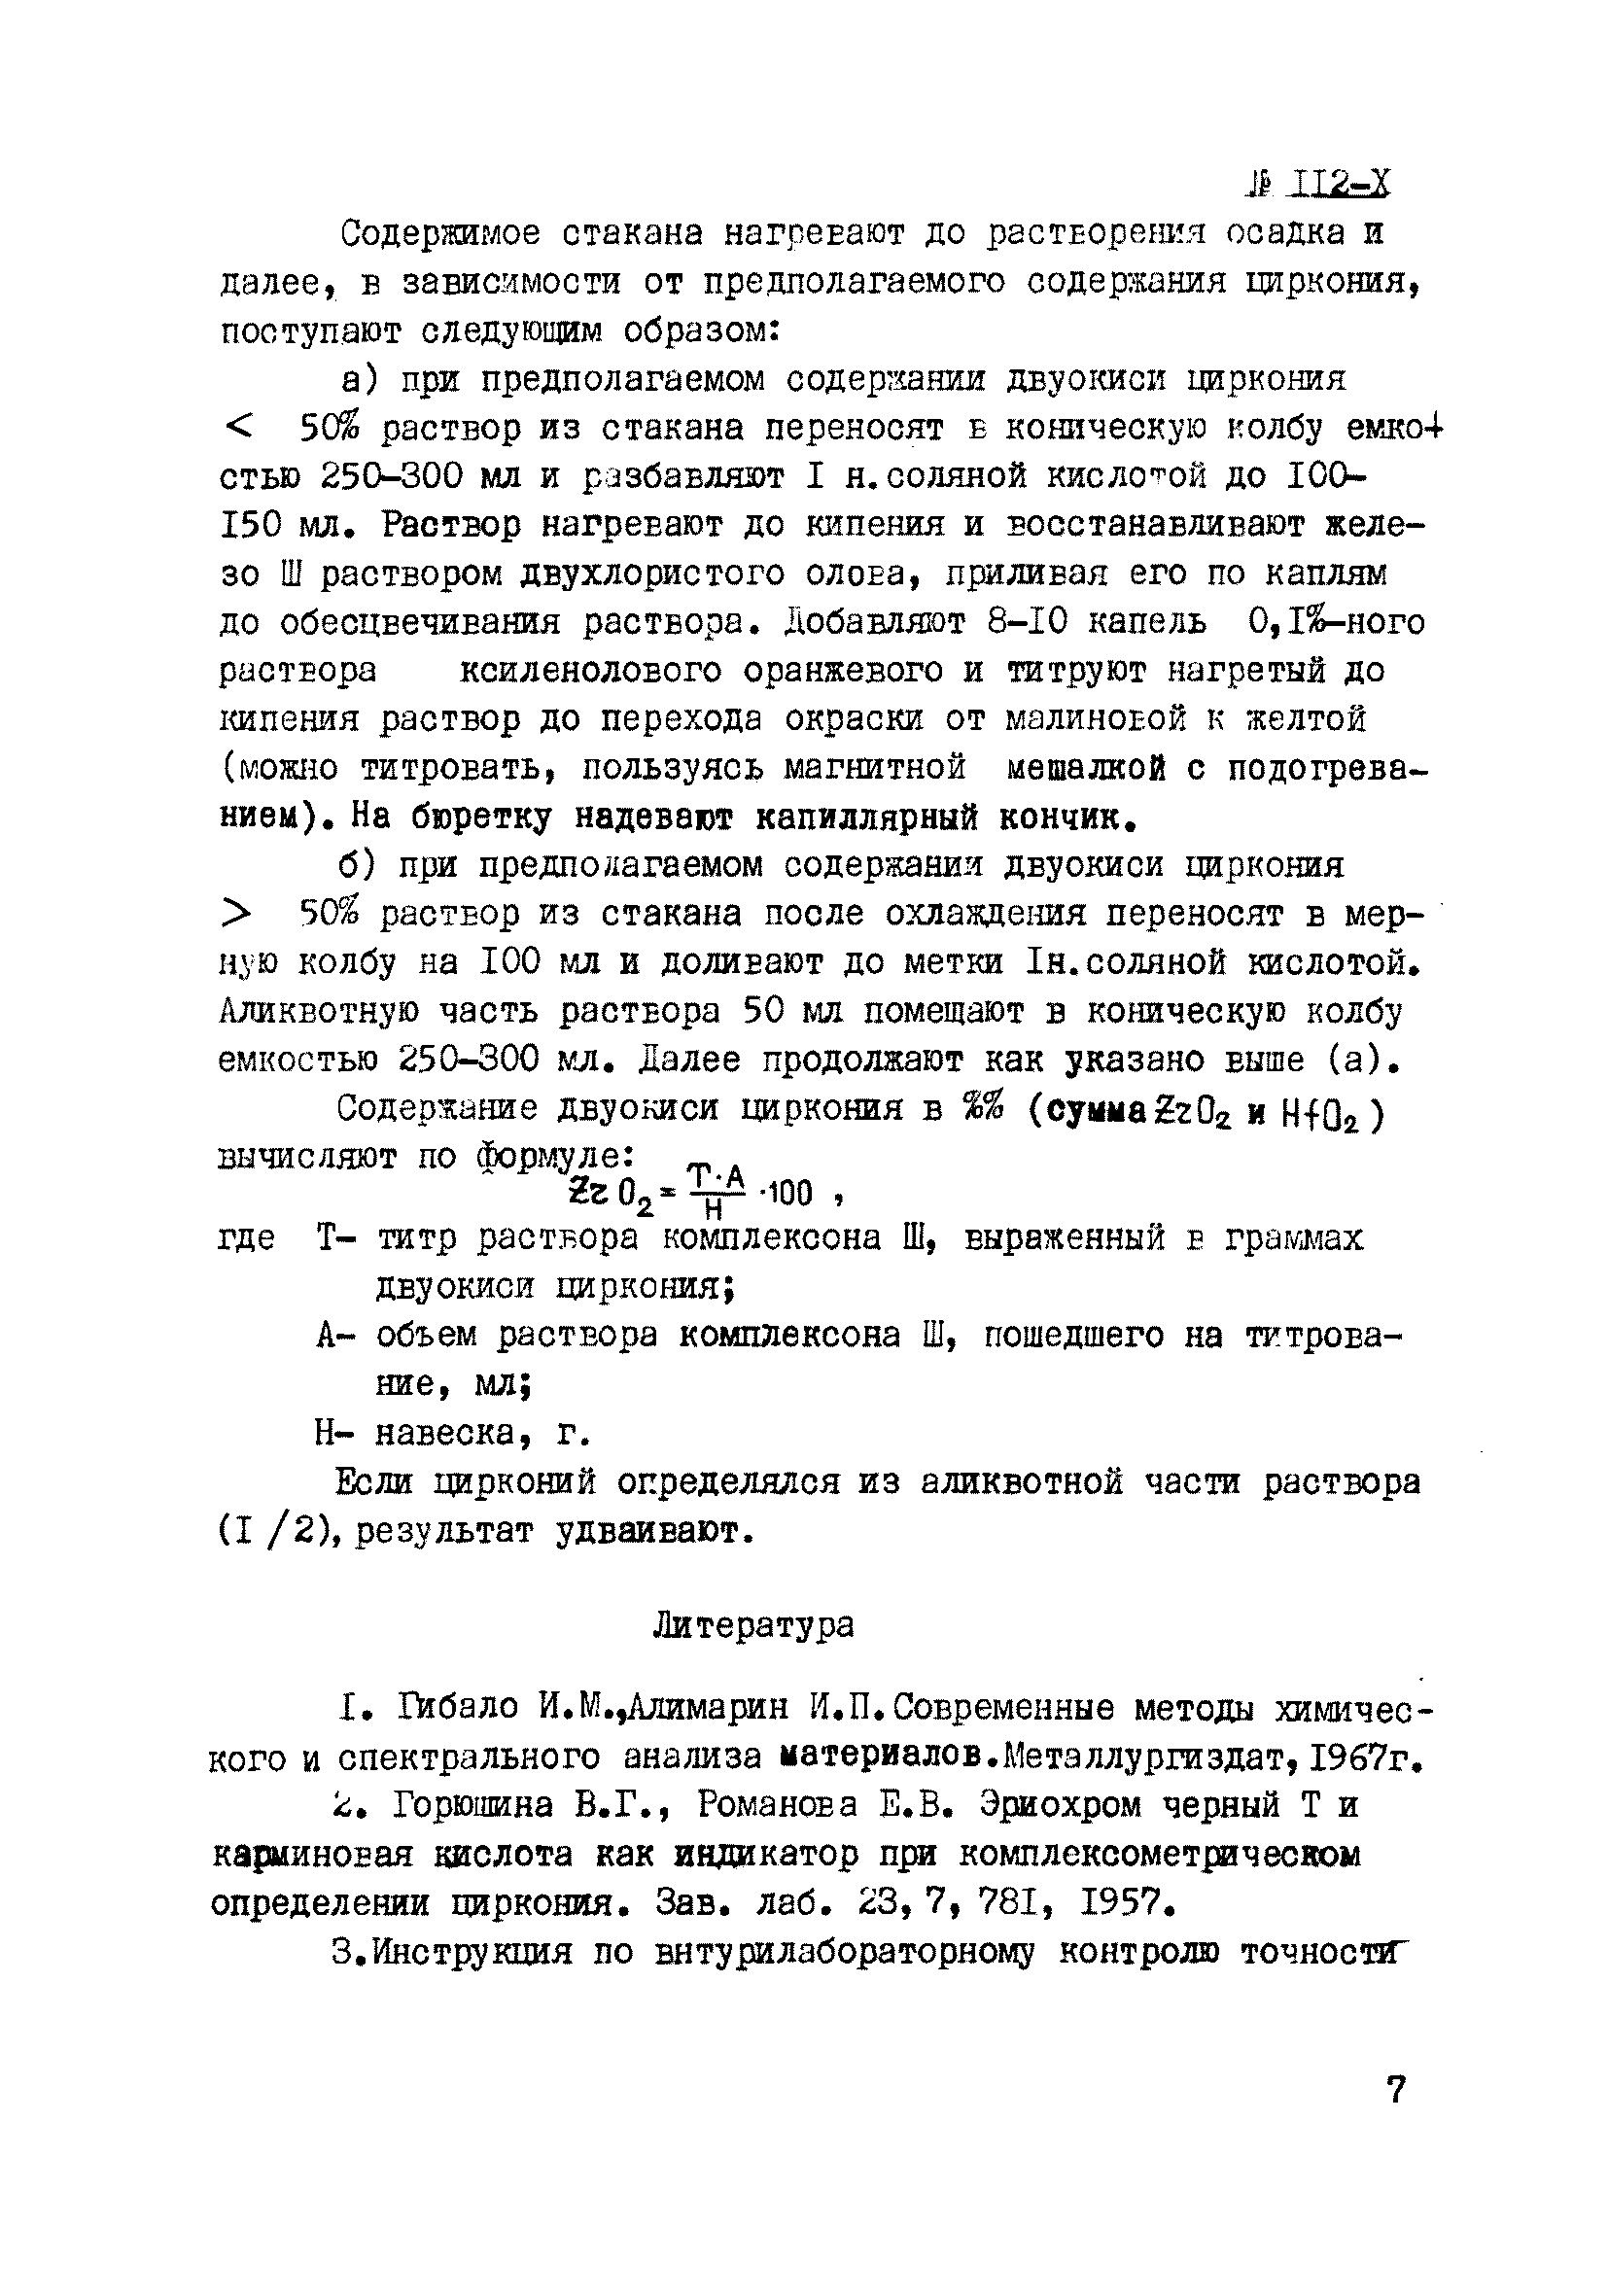 Инструкция НСАМ 112-Х